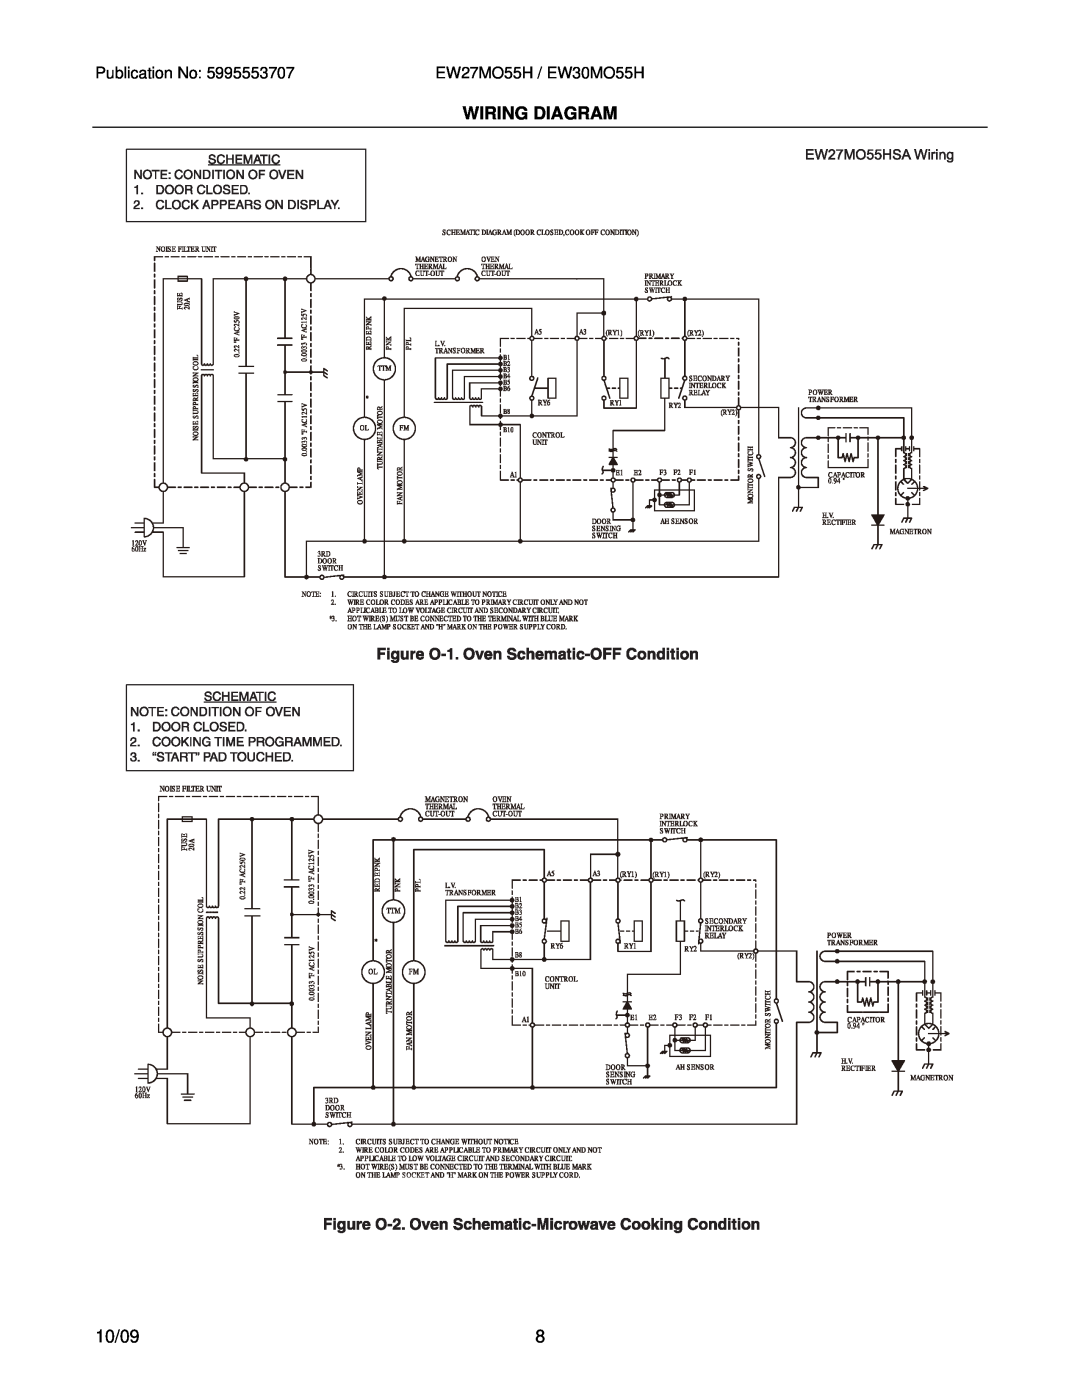 Electrolux EW27MO55HSA, EW30MO55HSA installation instructions Wiring Diagram, 10/09 